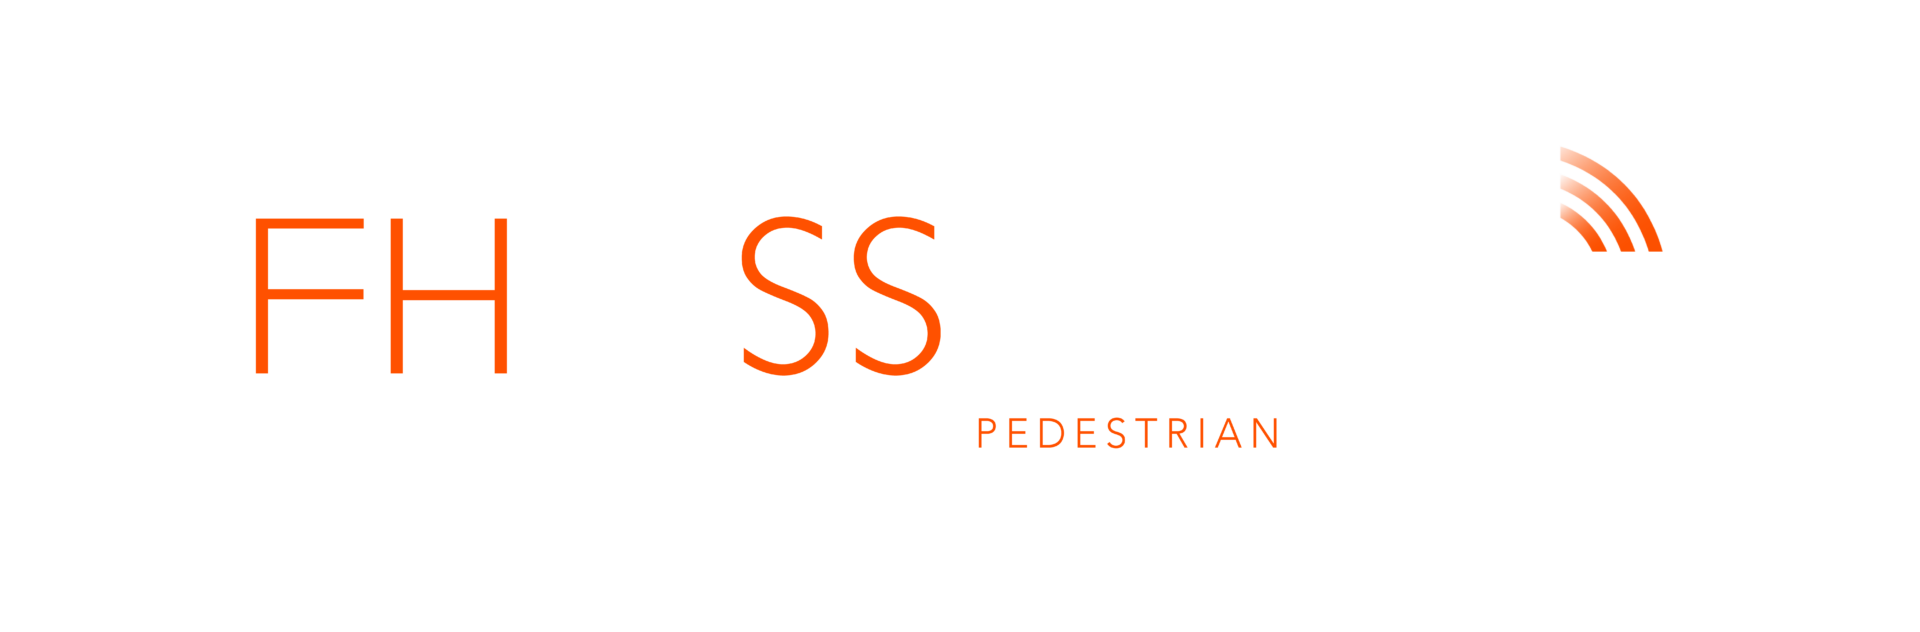 FHOSS Field Pedestrian Safety System logo